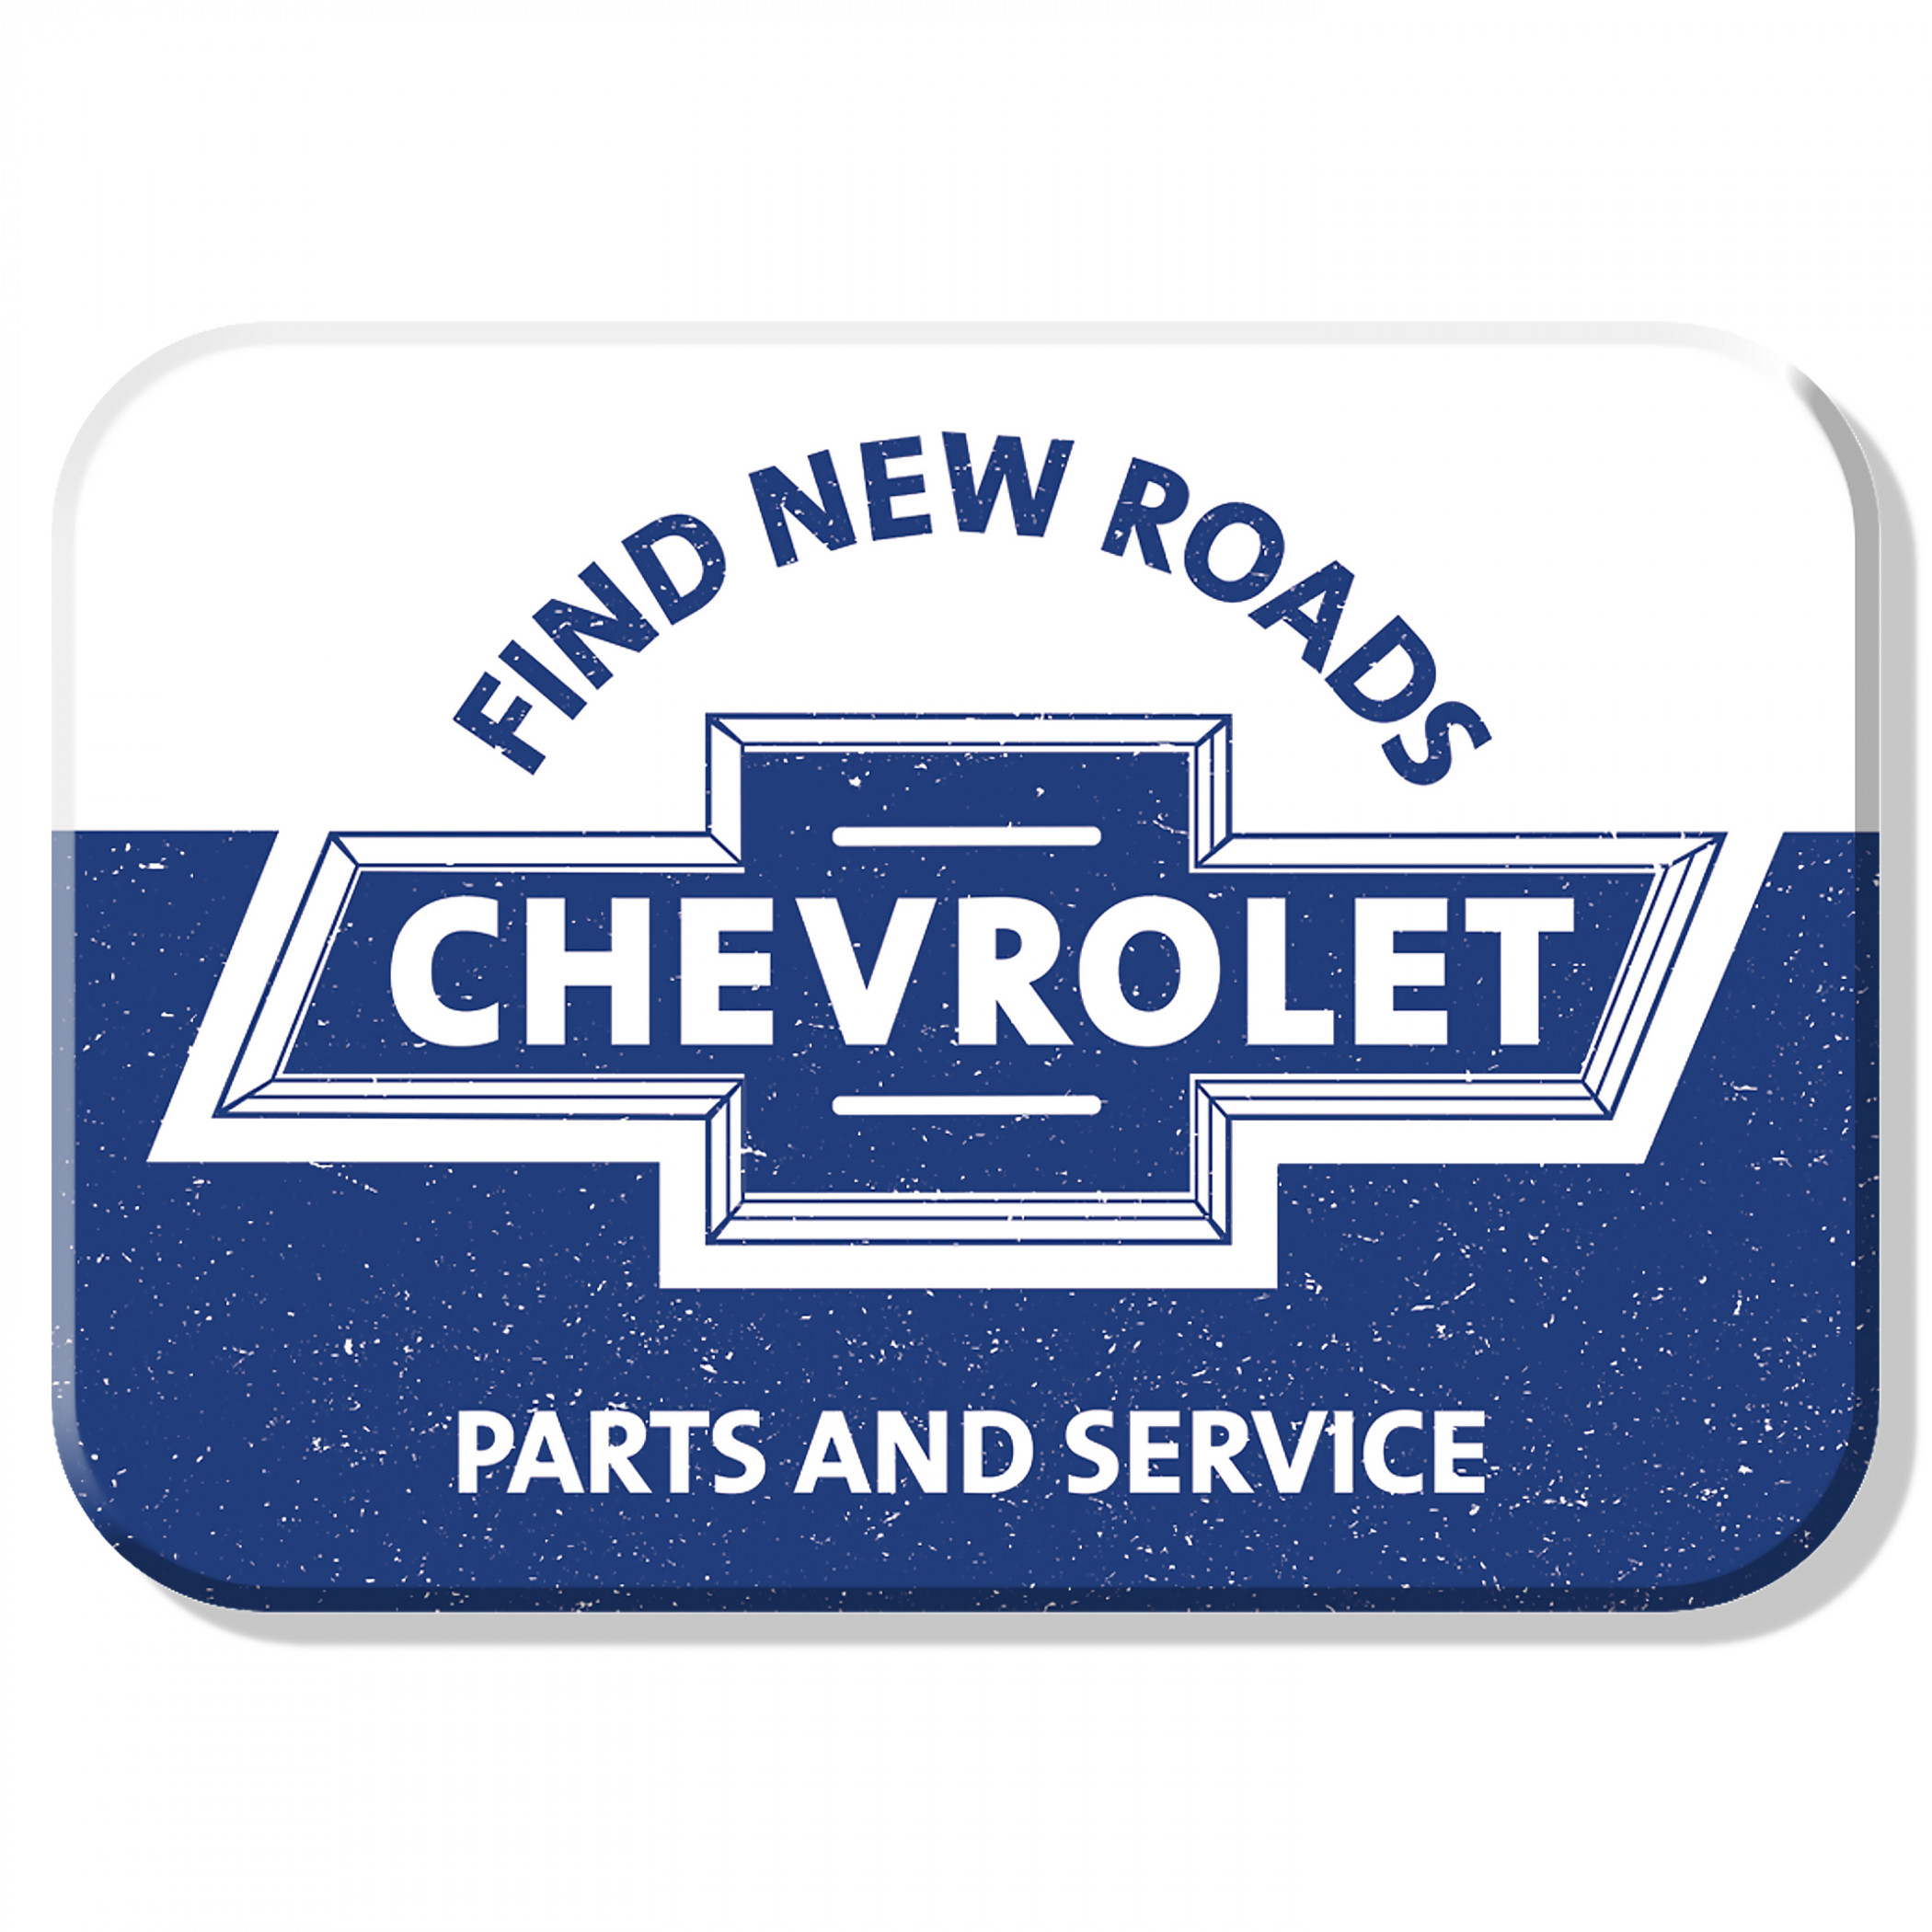 Chevrolet Find New Roads Logo Magnet